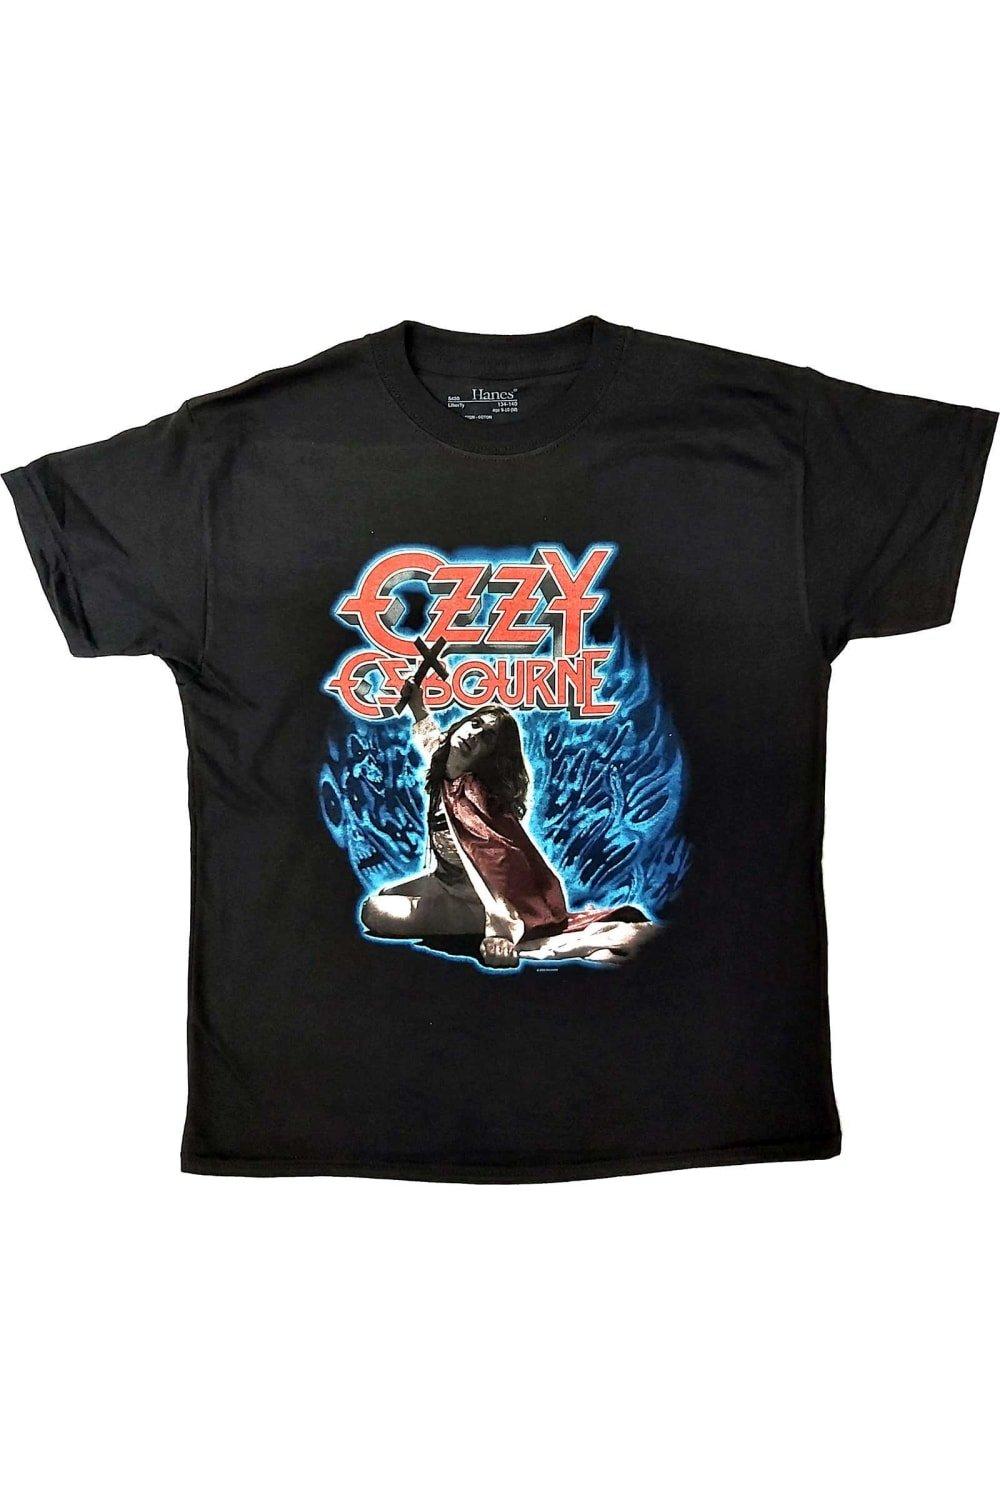 Хлопковая футболка Blizzard Of Ozz Ozzy Osbourne, черный футболка ozzy osbourne blizzard of ozz logo